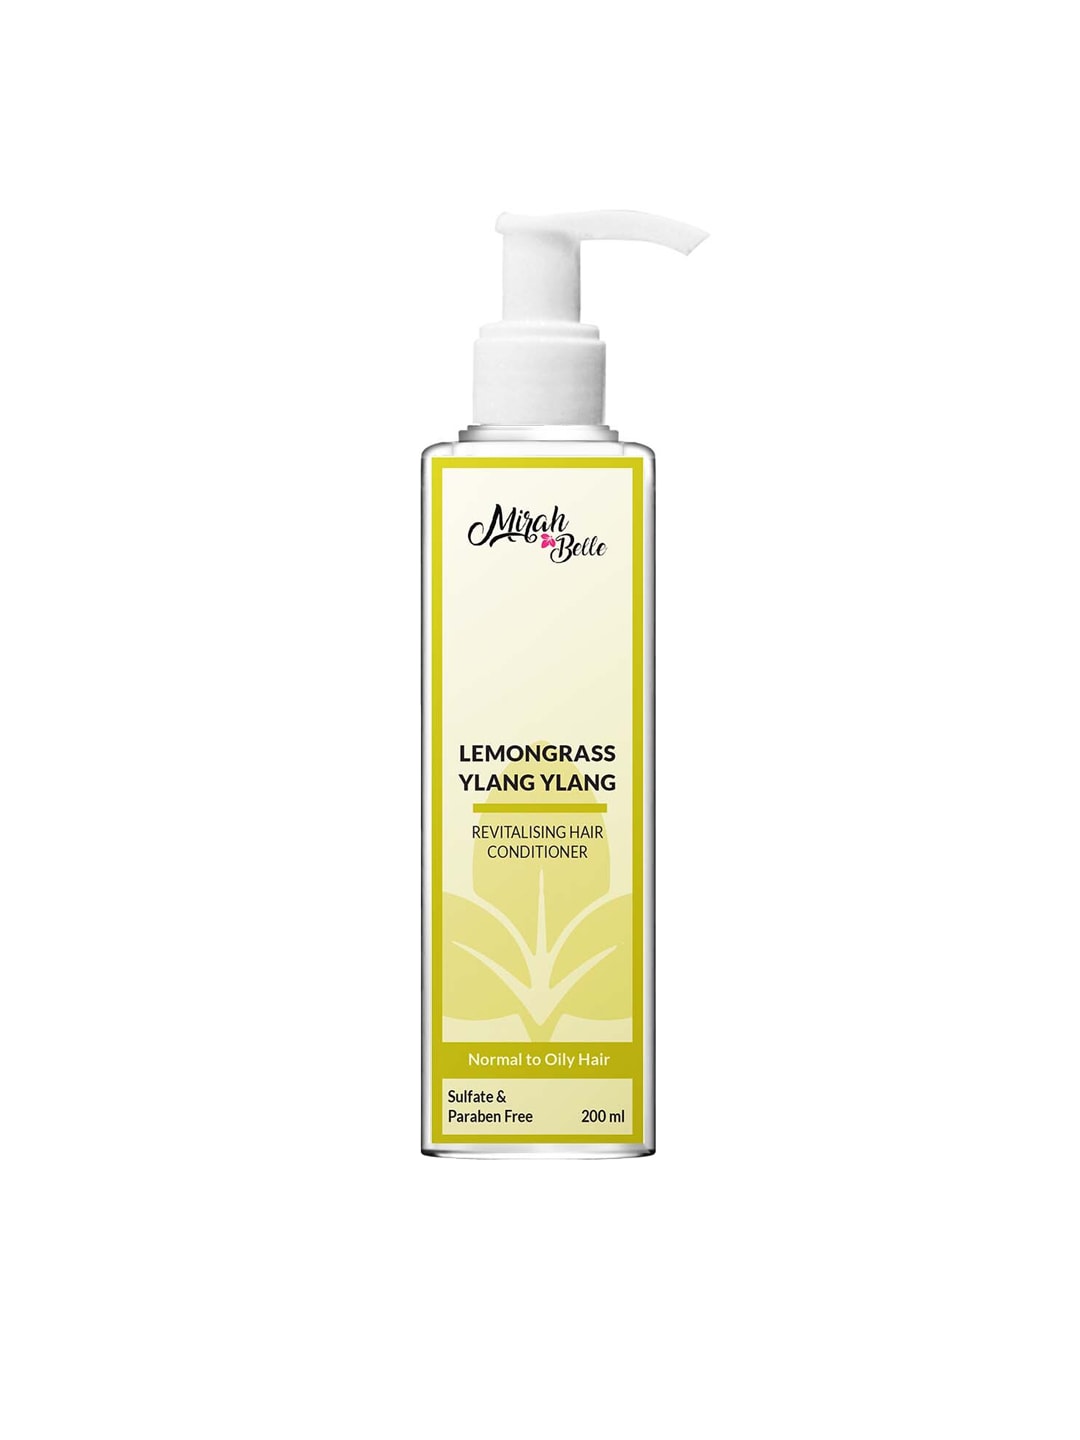 Mirah Belle Unisex Lemongrass Ylang Ylang Hair Conditioner 200 ml Price in India